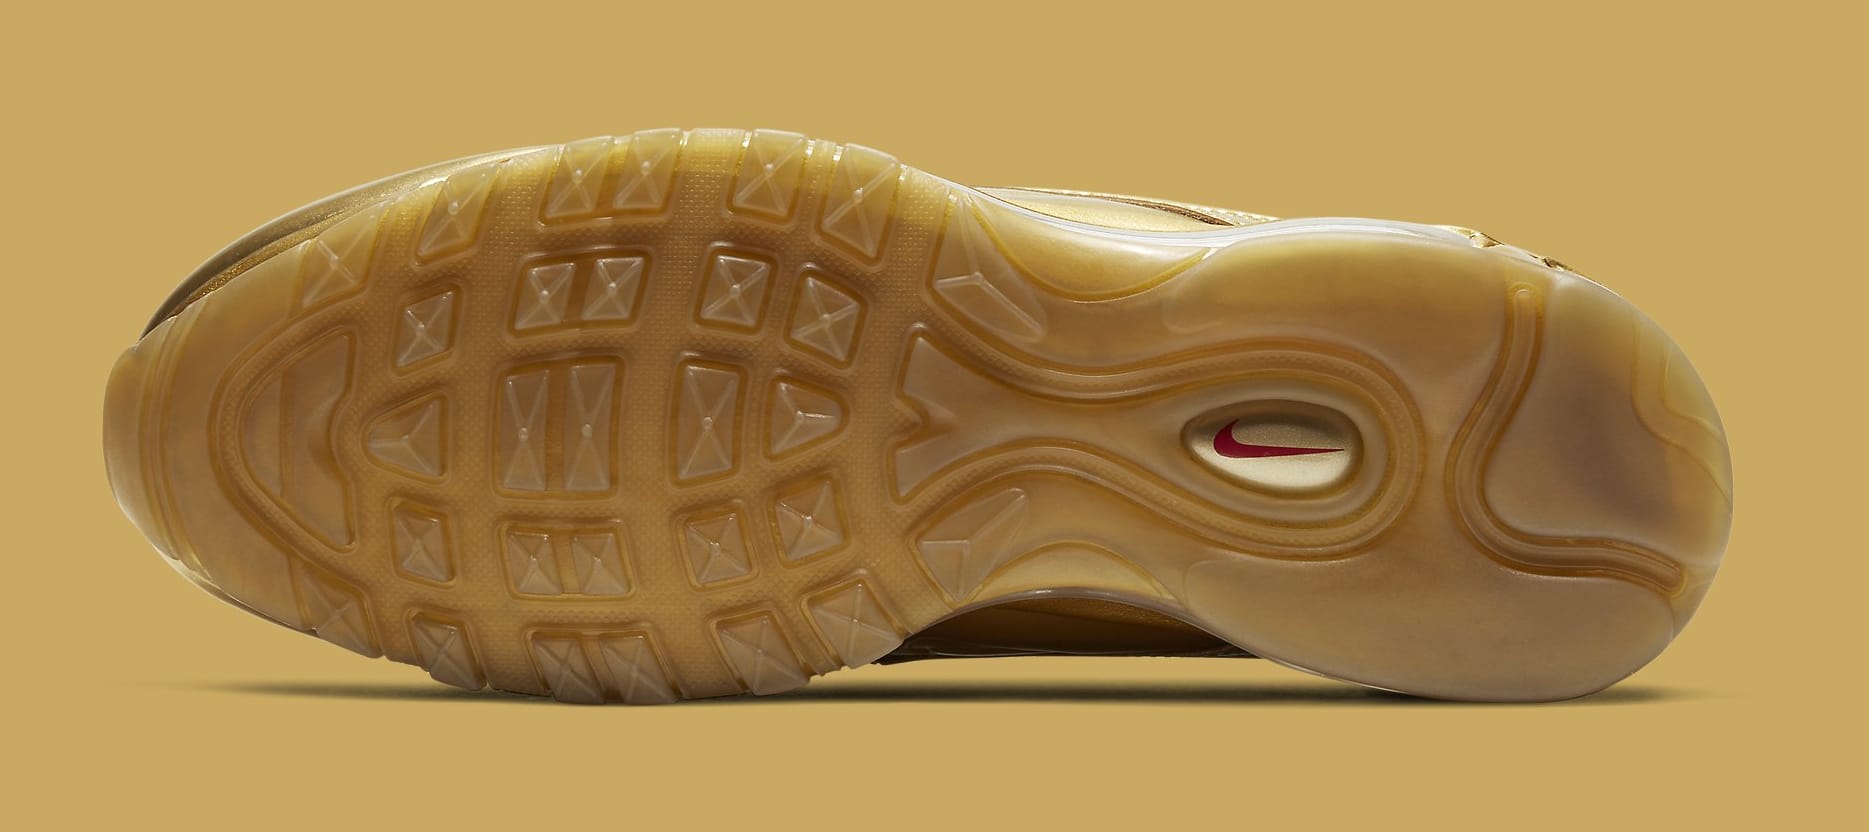 Nike Air Max 97 Metallic Gold CT4556-700